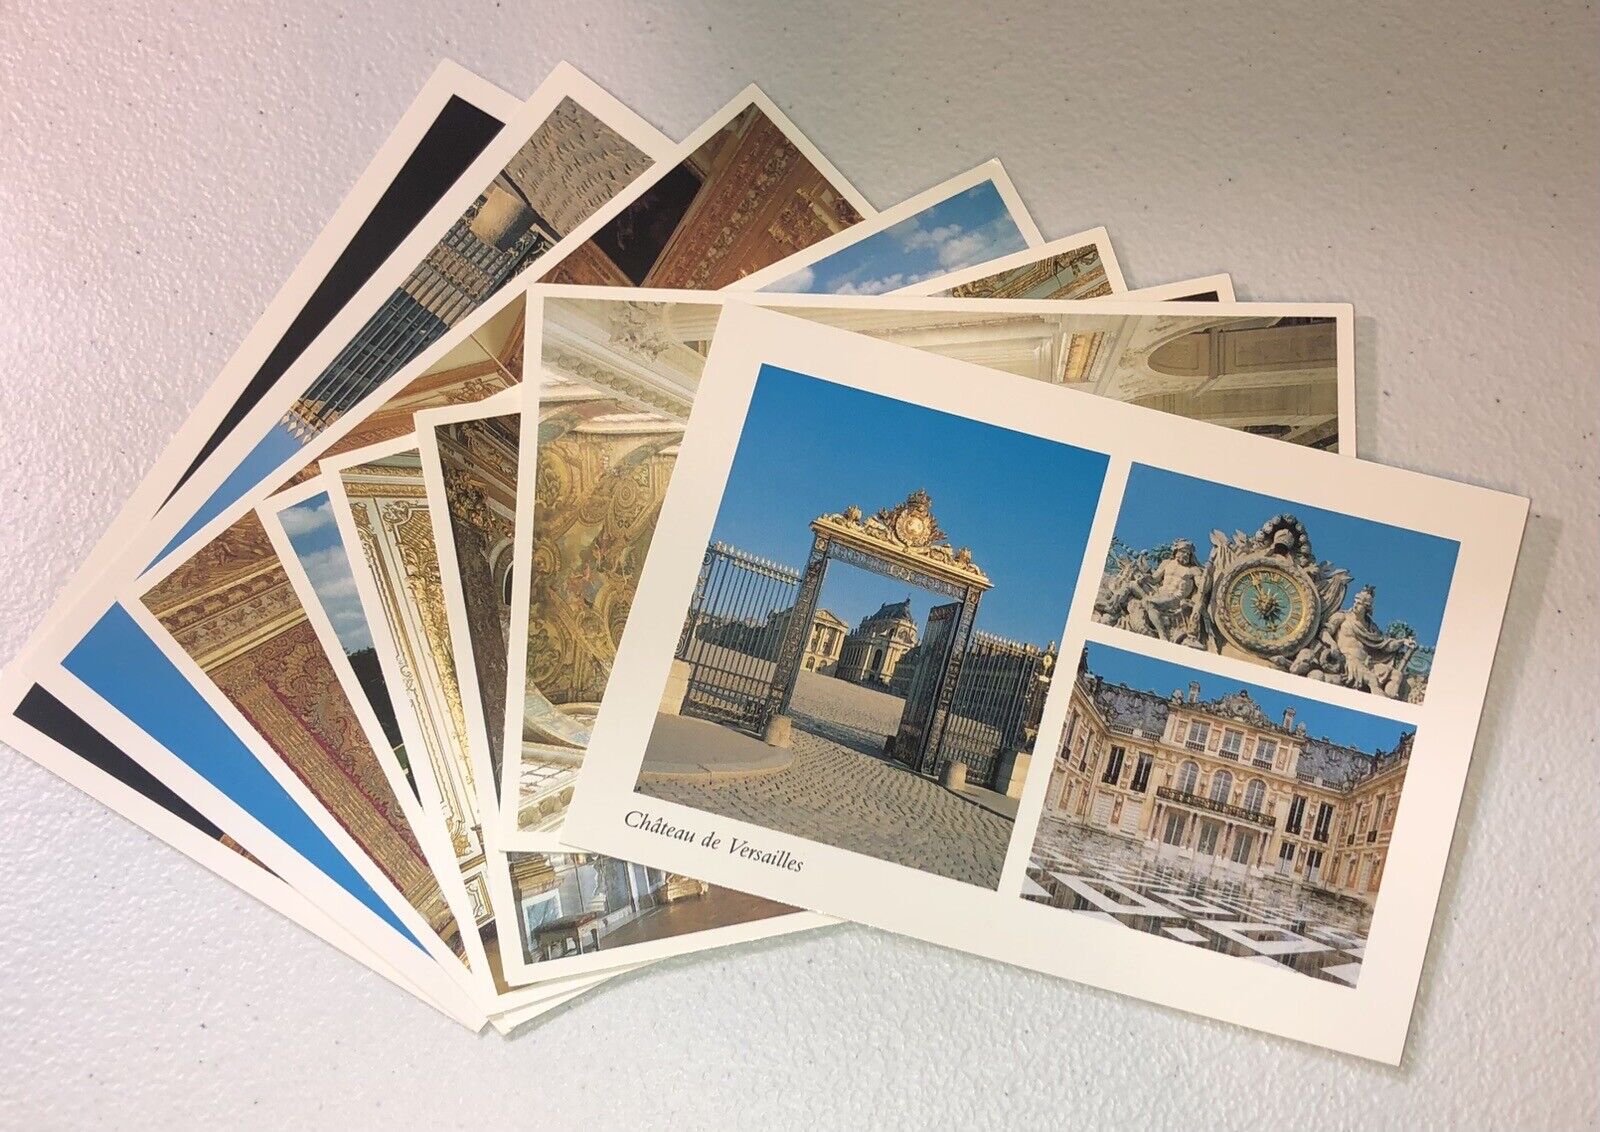 Lot of 11 Postcards Palace of Versailles France - Interior & Exterior Views